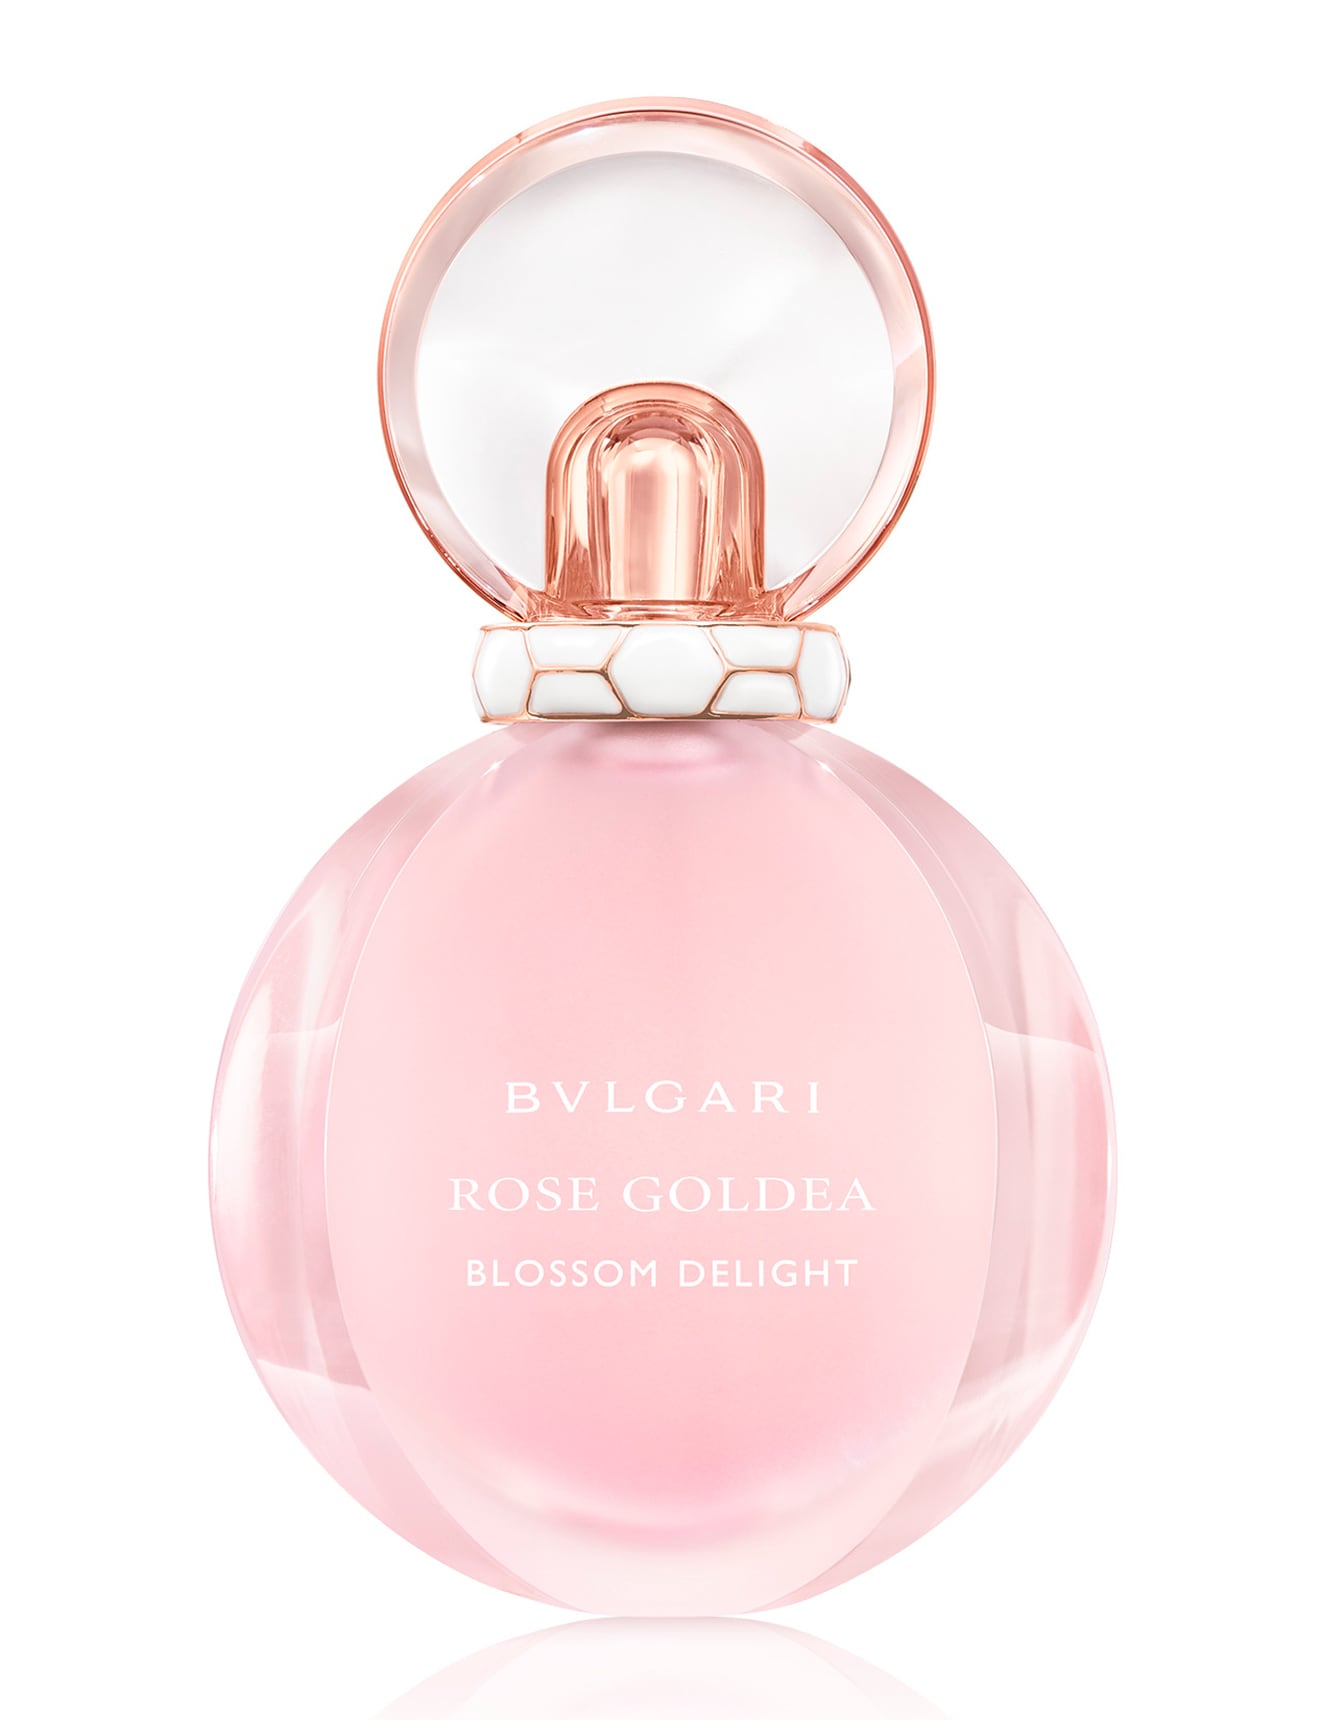 Bvlgari Rose Goldea Blossom Delight EDT, 50ml product photo